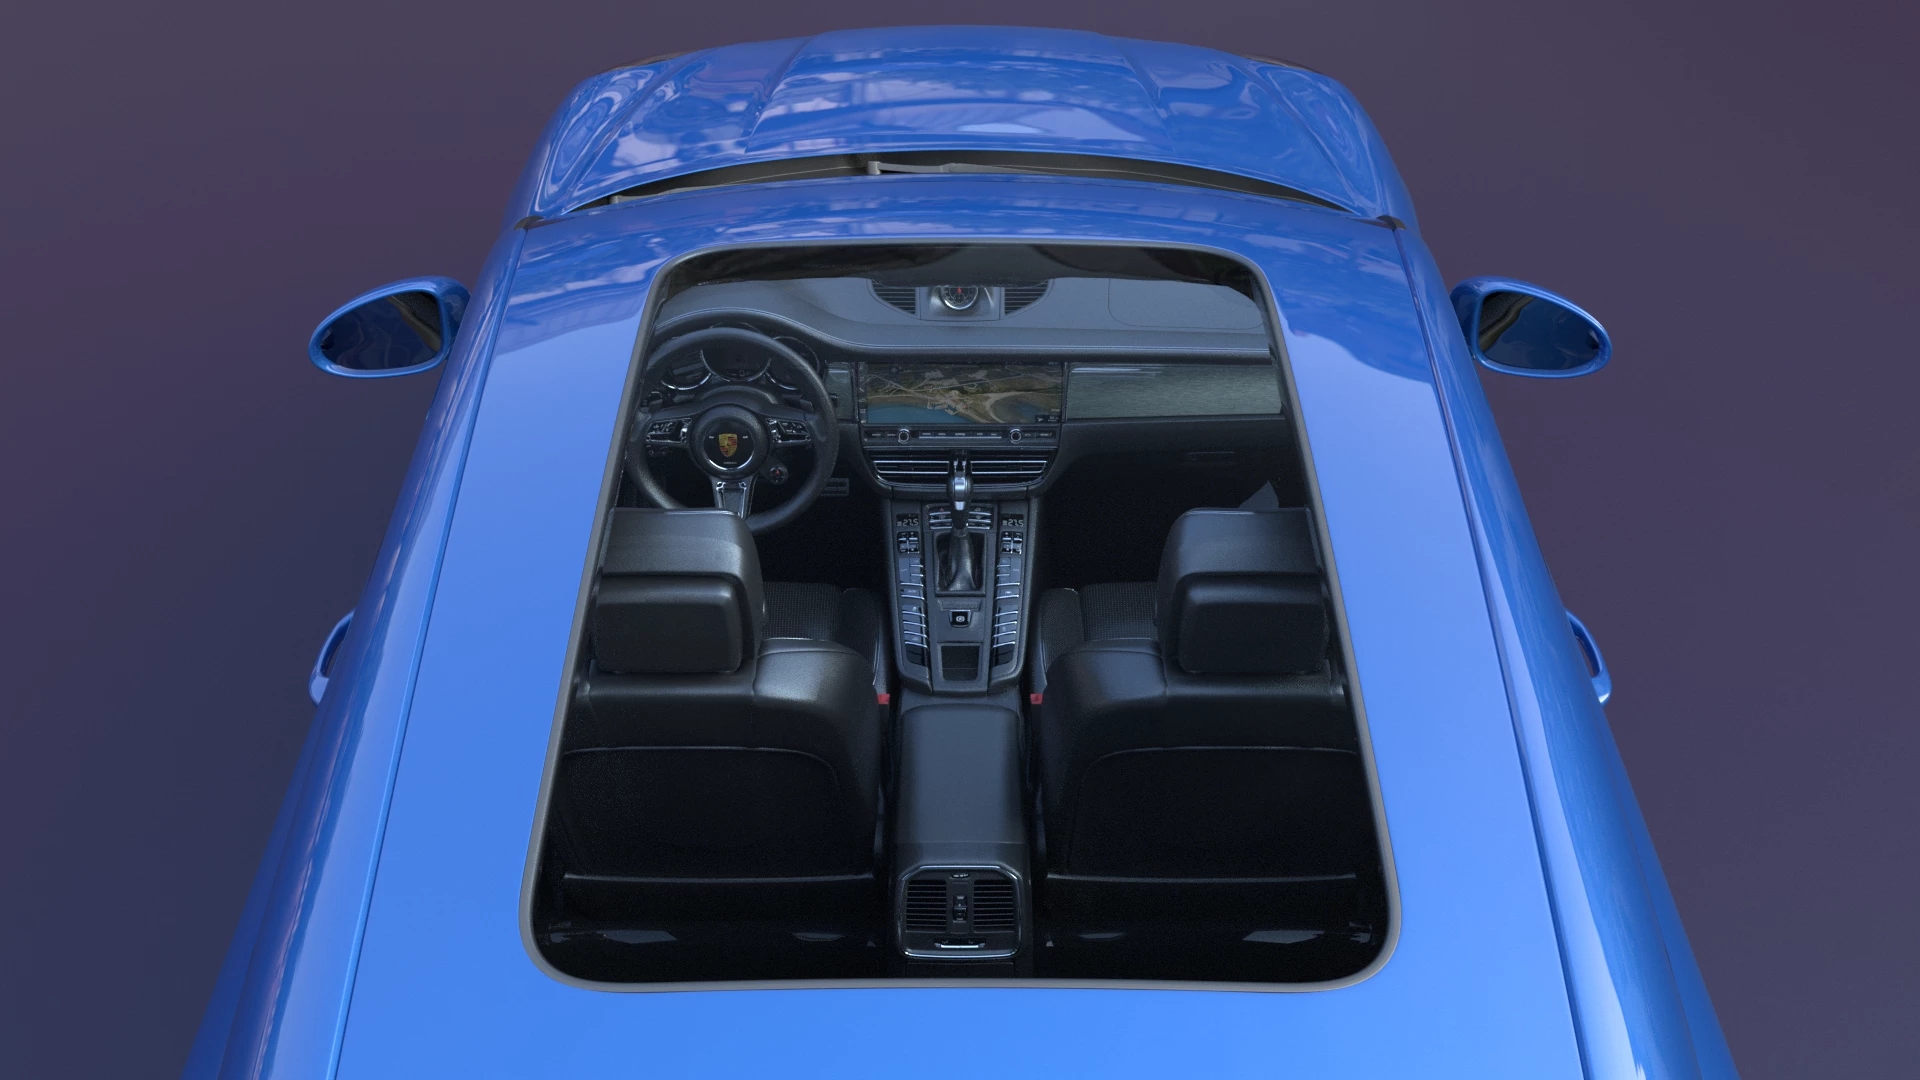 1386 C4D工程模板：精品保时捷汽车模型超详细（可做汽车相关动画，汽车周边产品效果图背景）